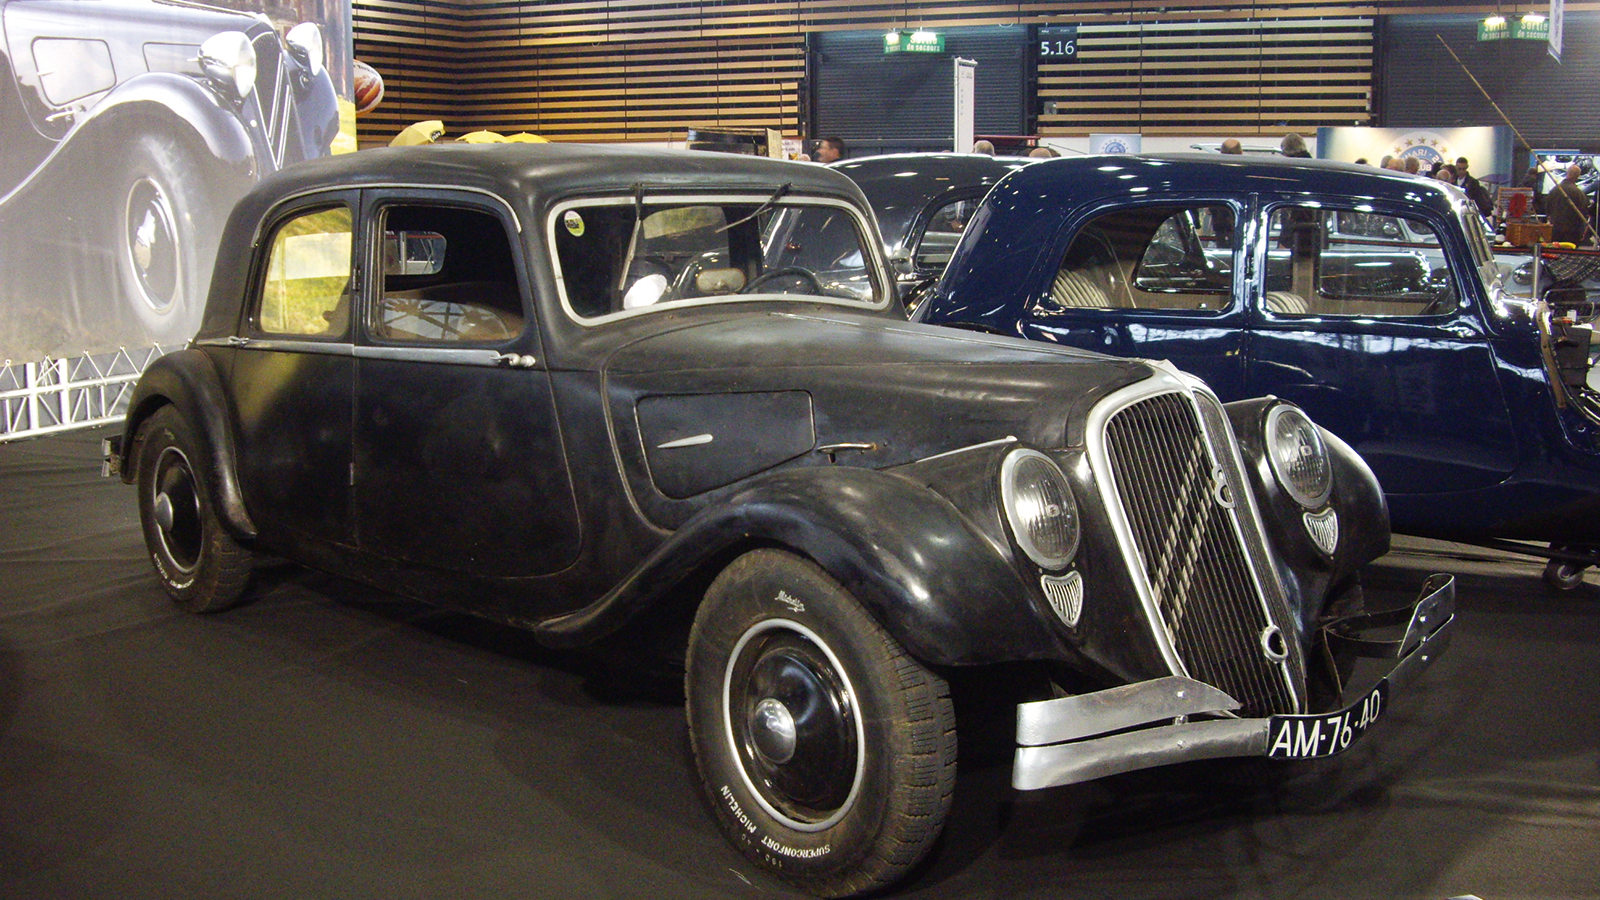 20 of the strangest Citroëns ever built